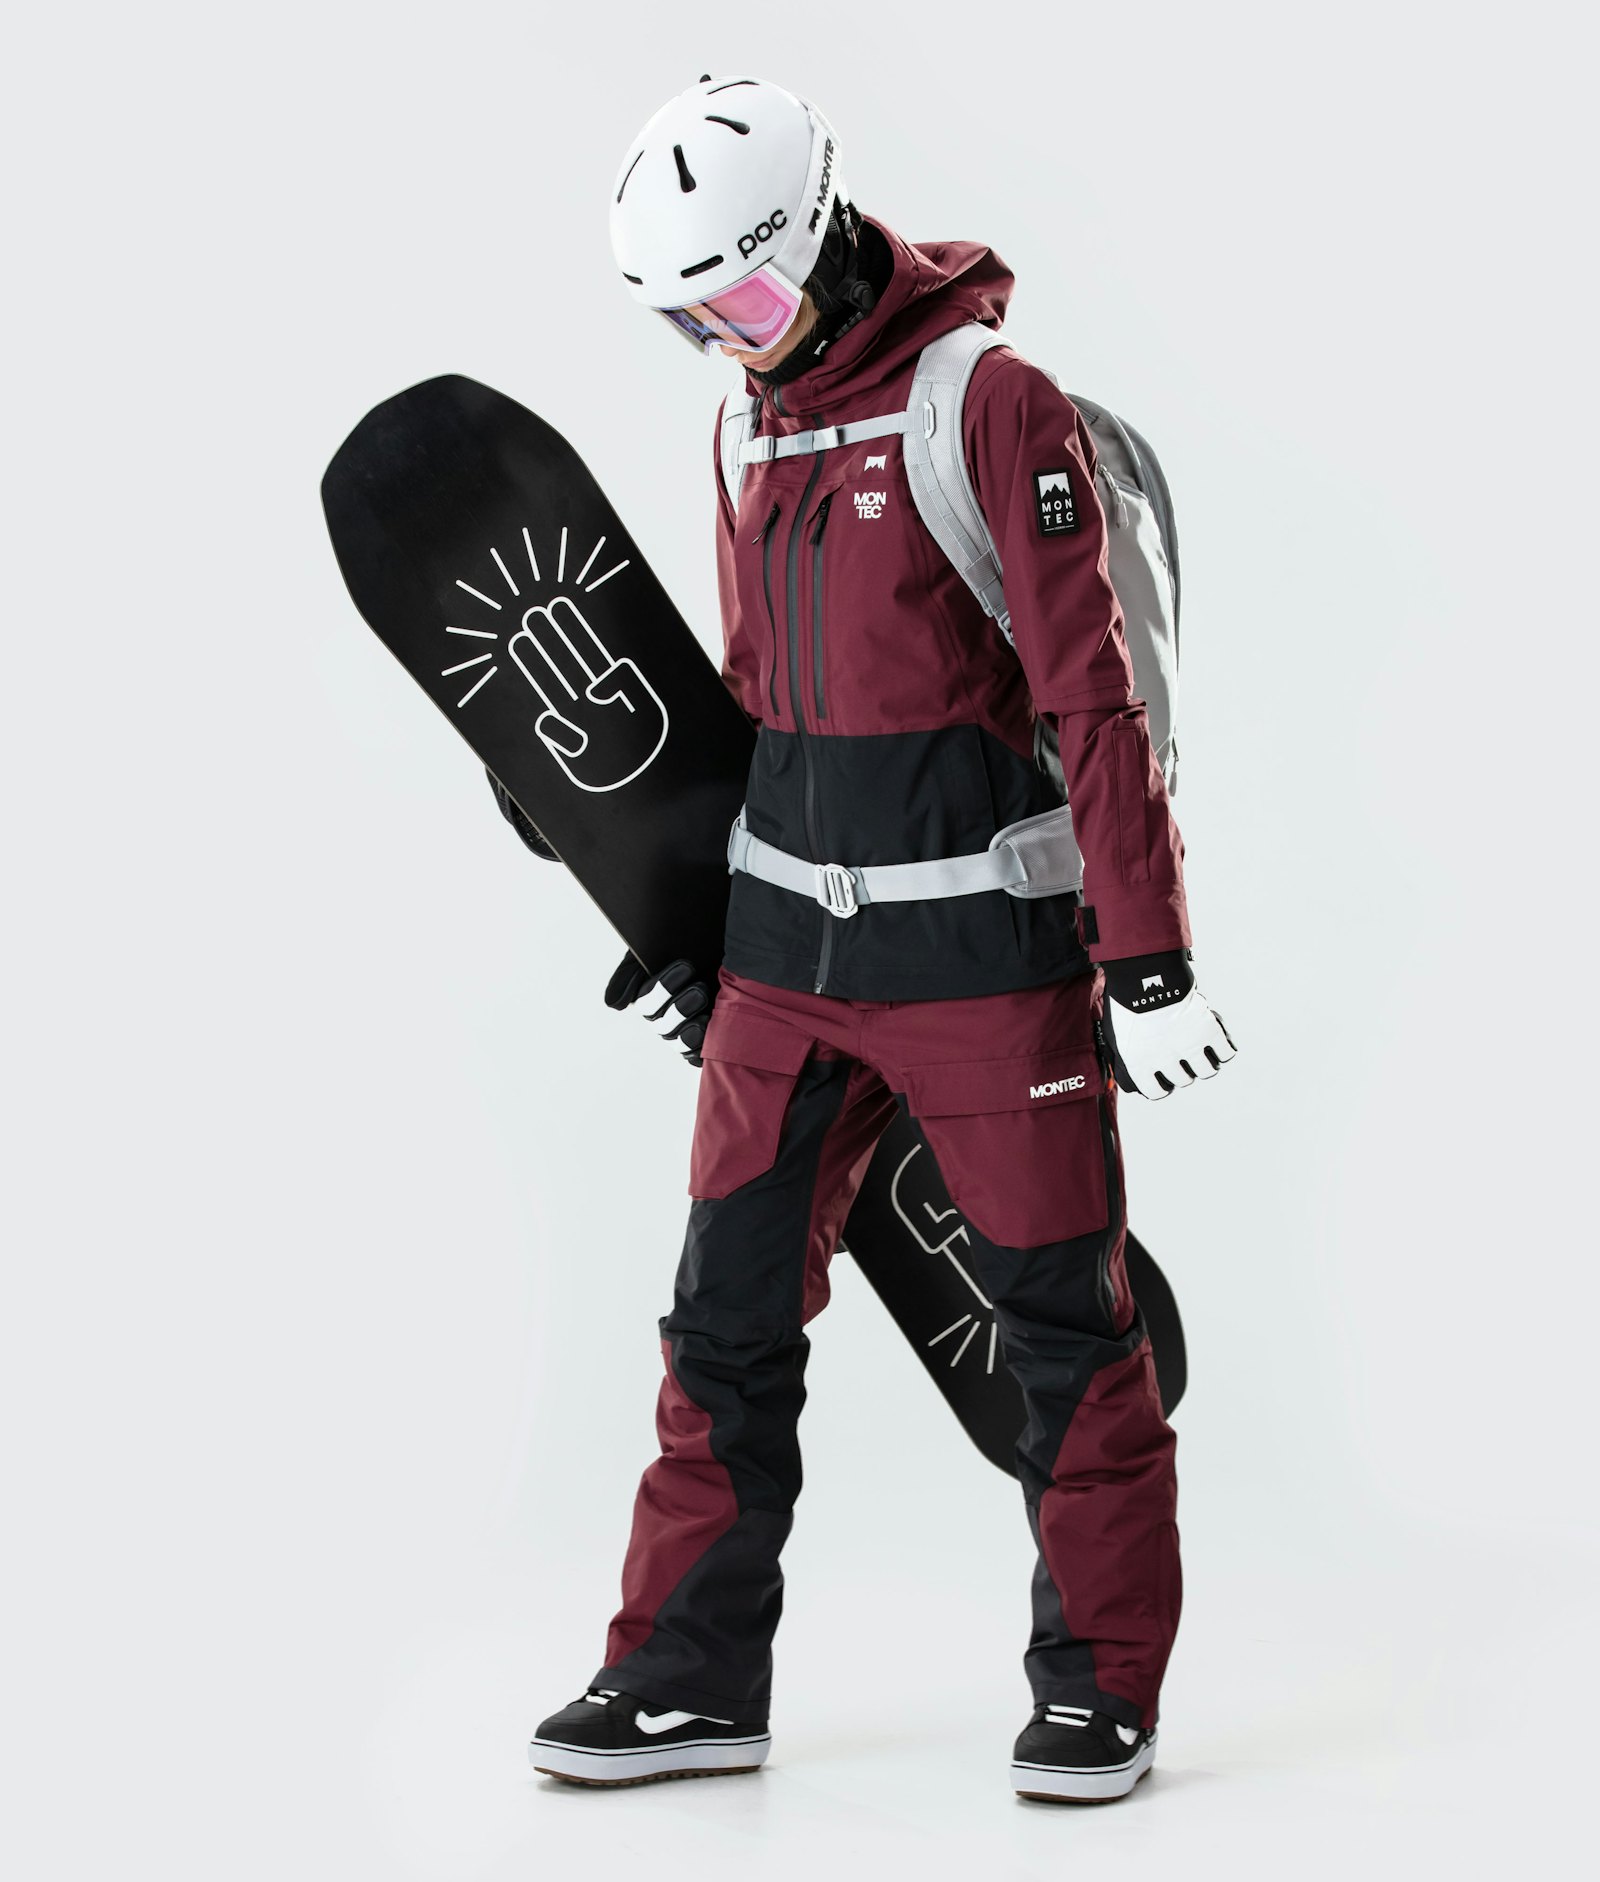 Moss W 2020 Giacca Snowboard Donna Burgundy/Black